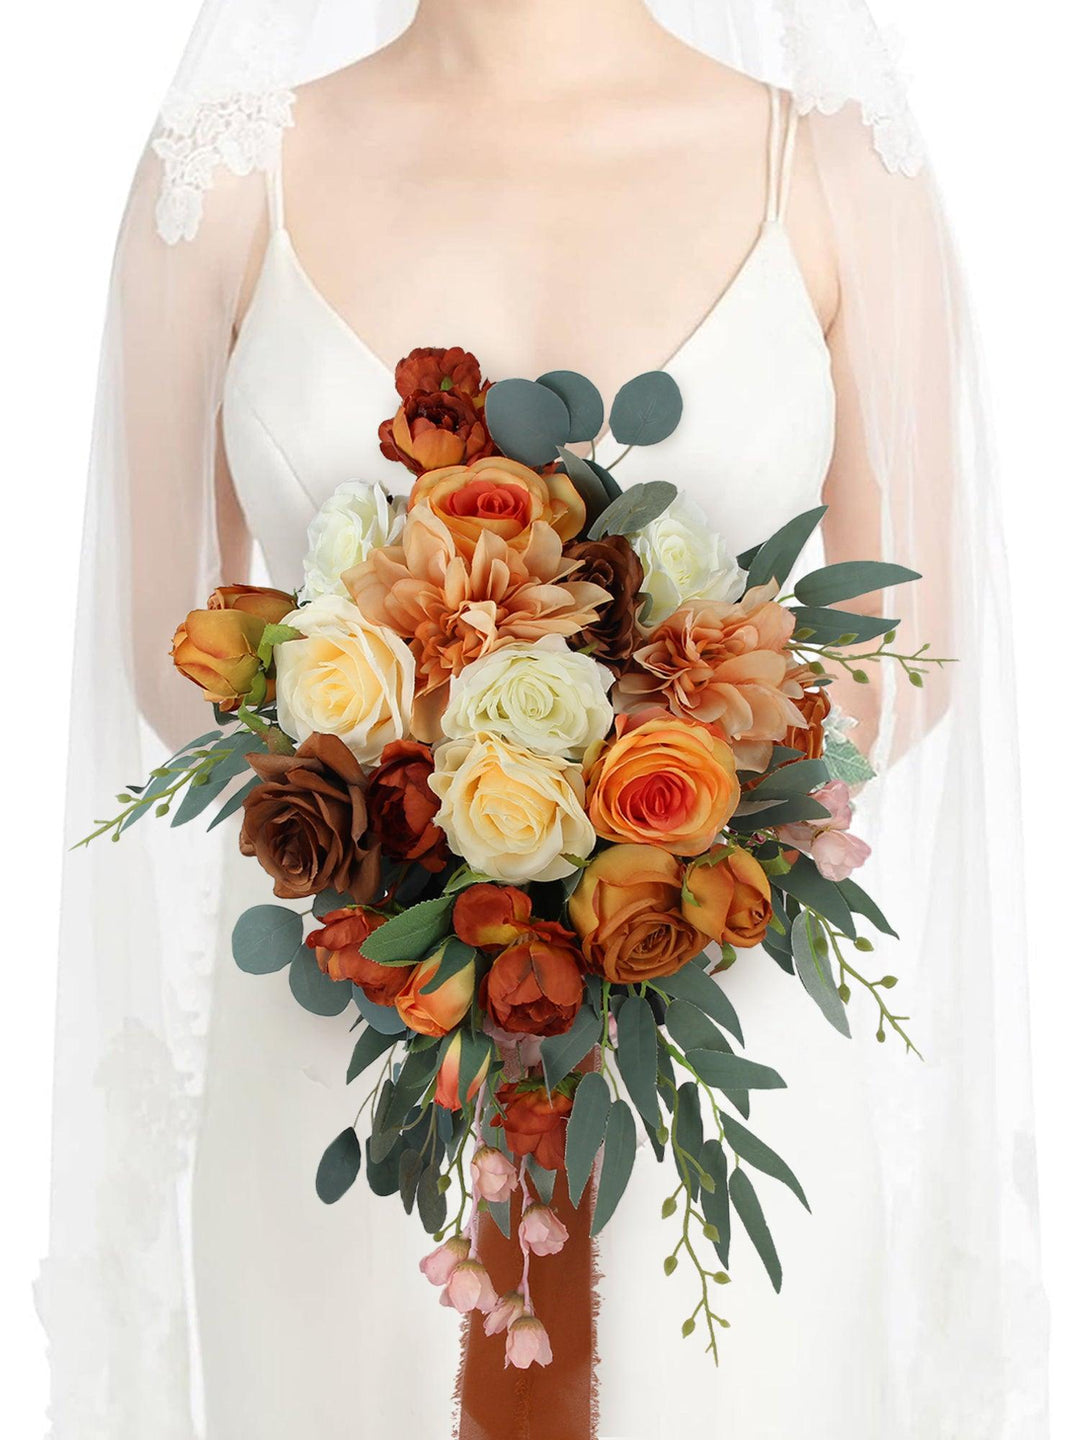 Why Is Seasonality Important When Choosing Wedding Flowers? - Rinlong Flower